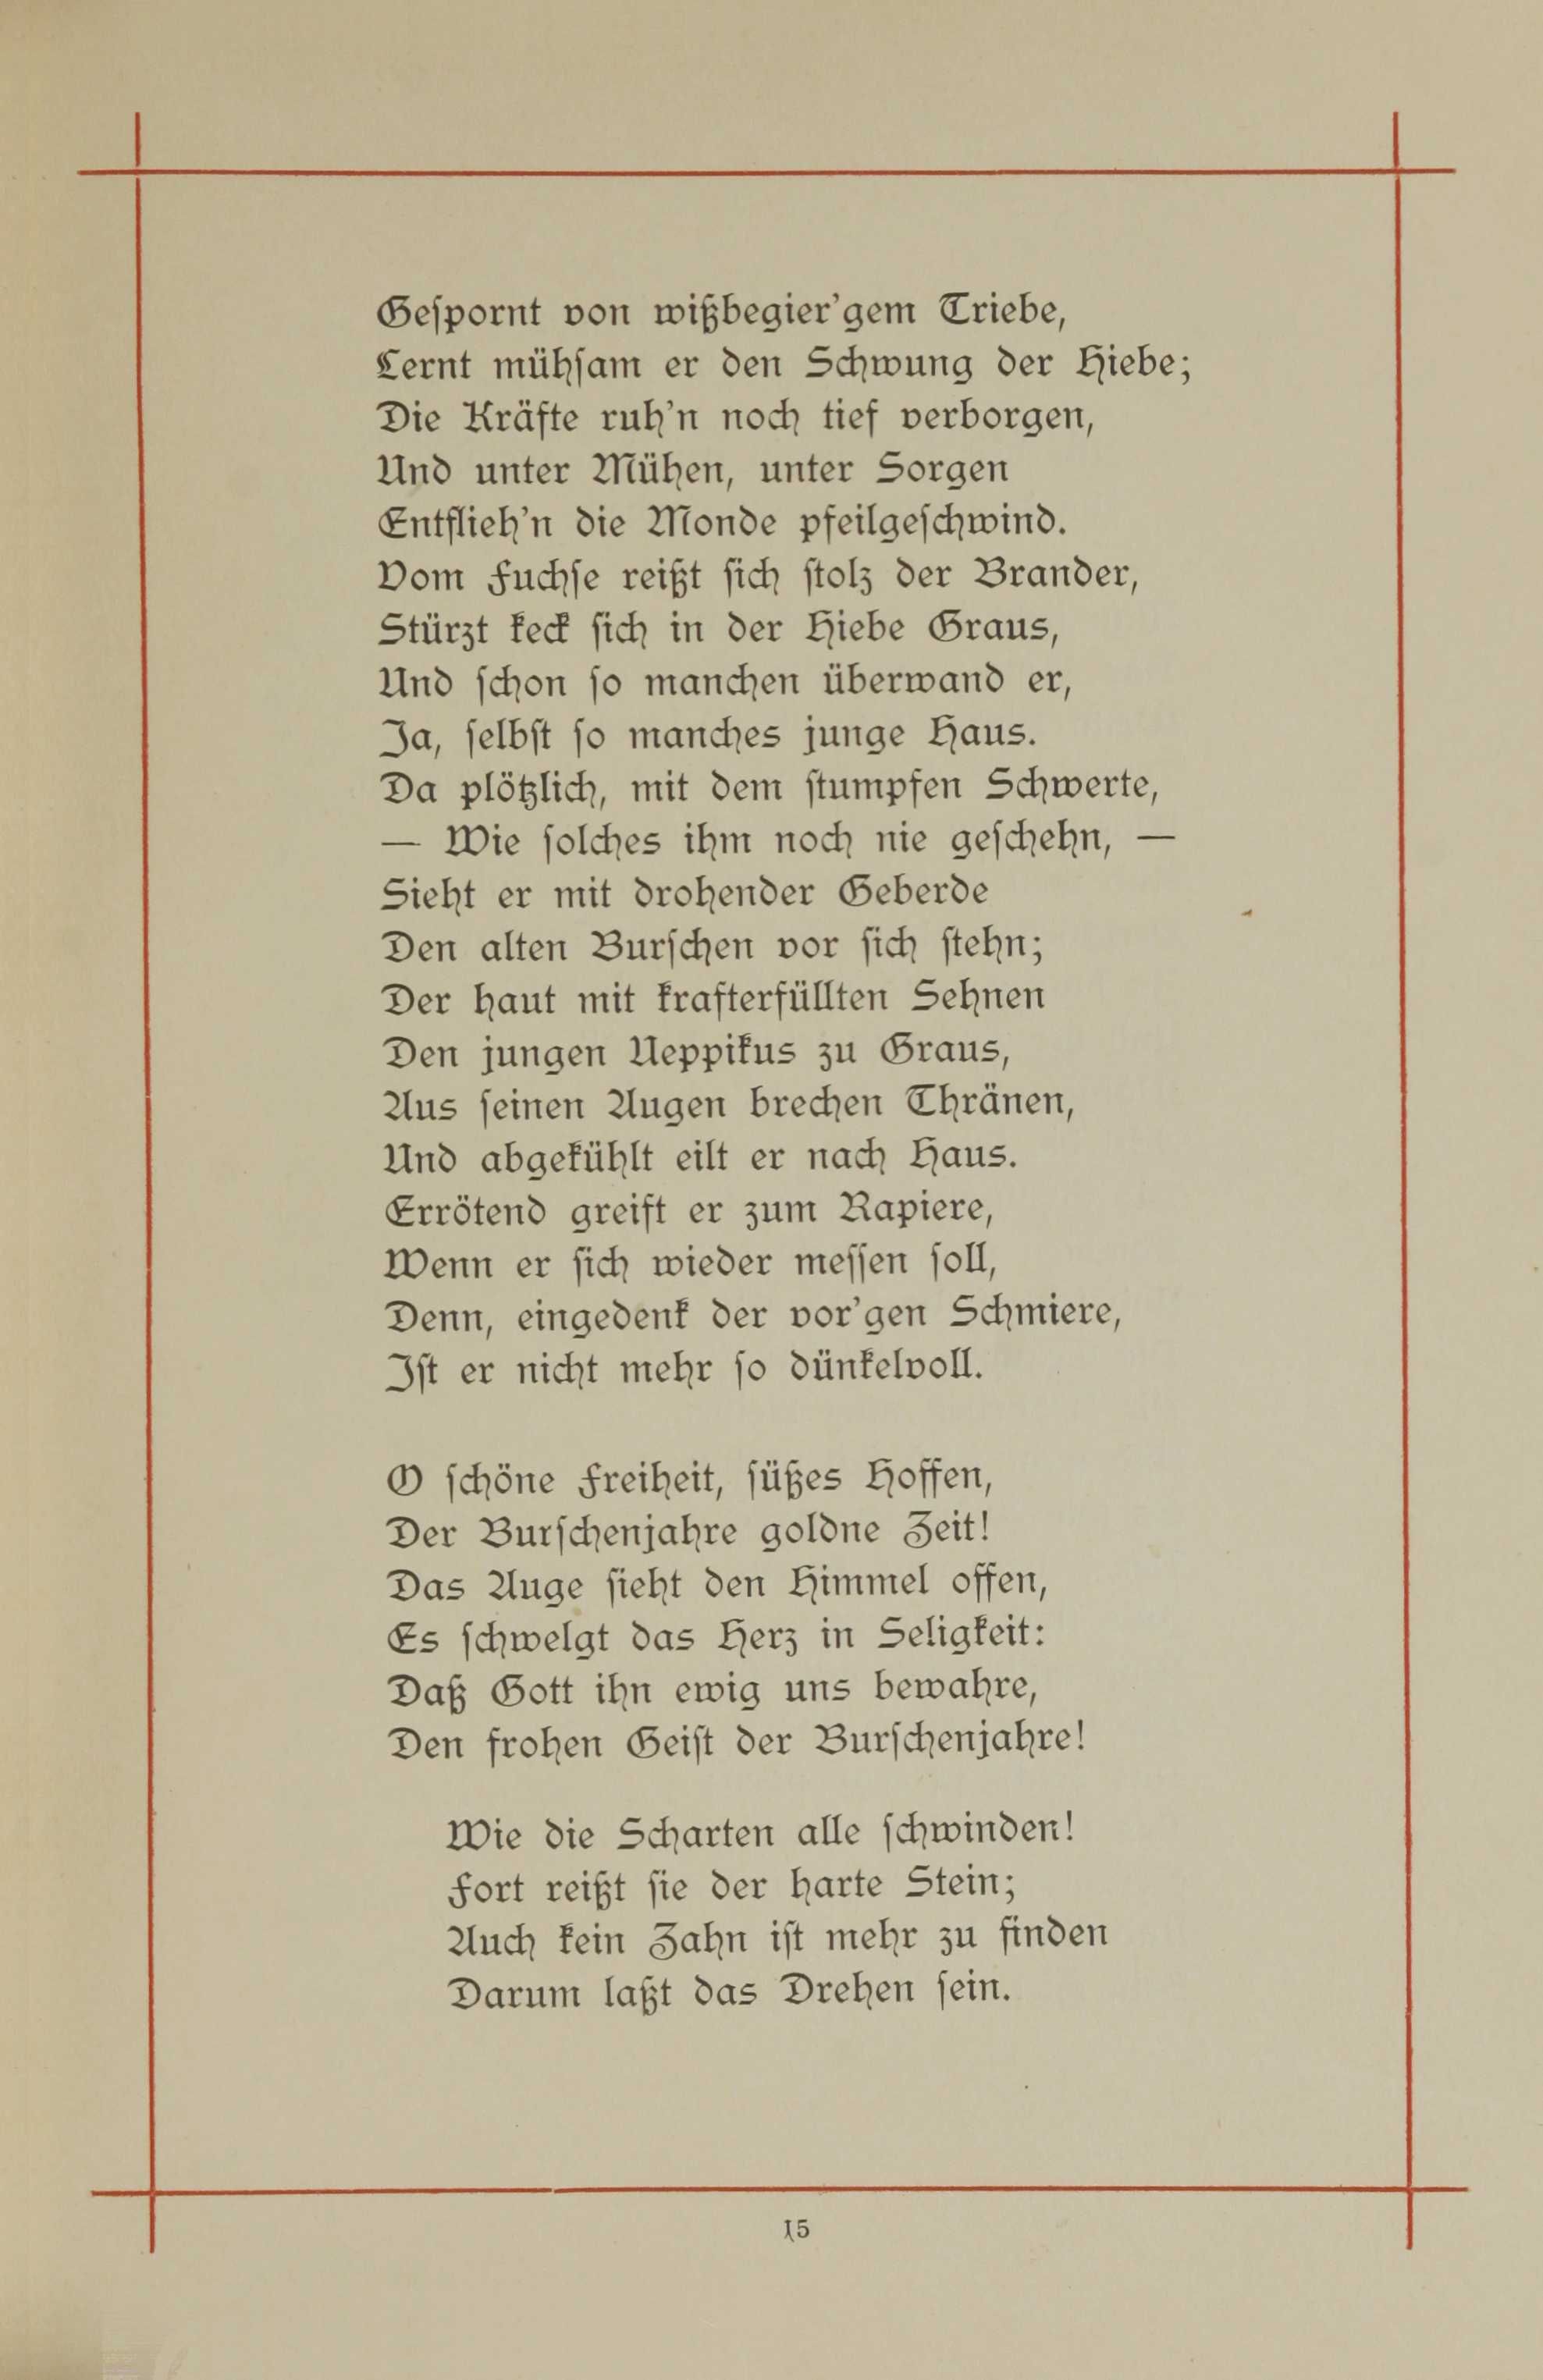 Erinnerung an die Fraternitas (1893) | 20. (15) Main body of text